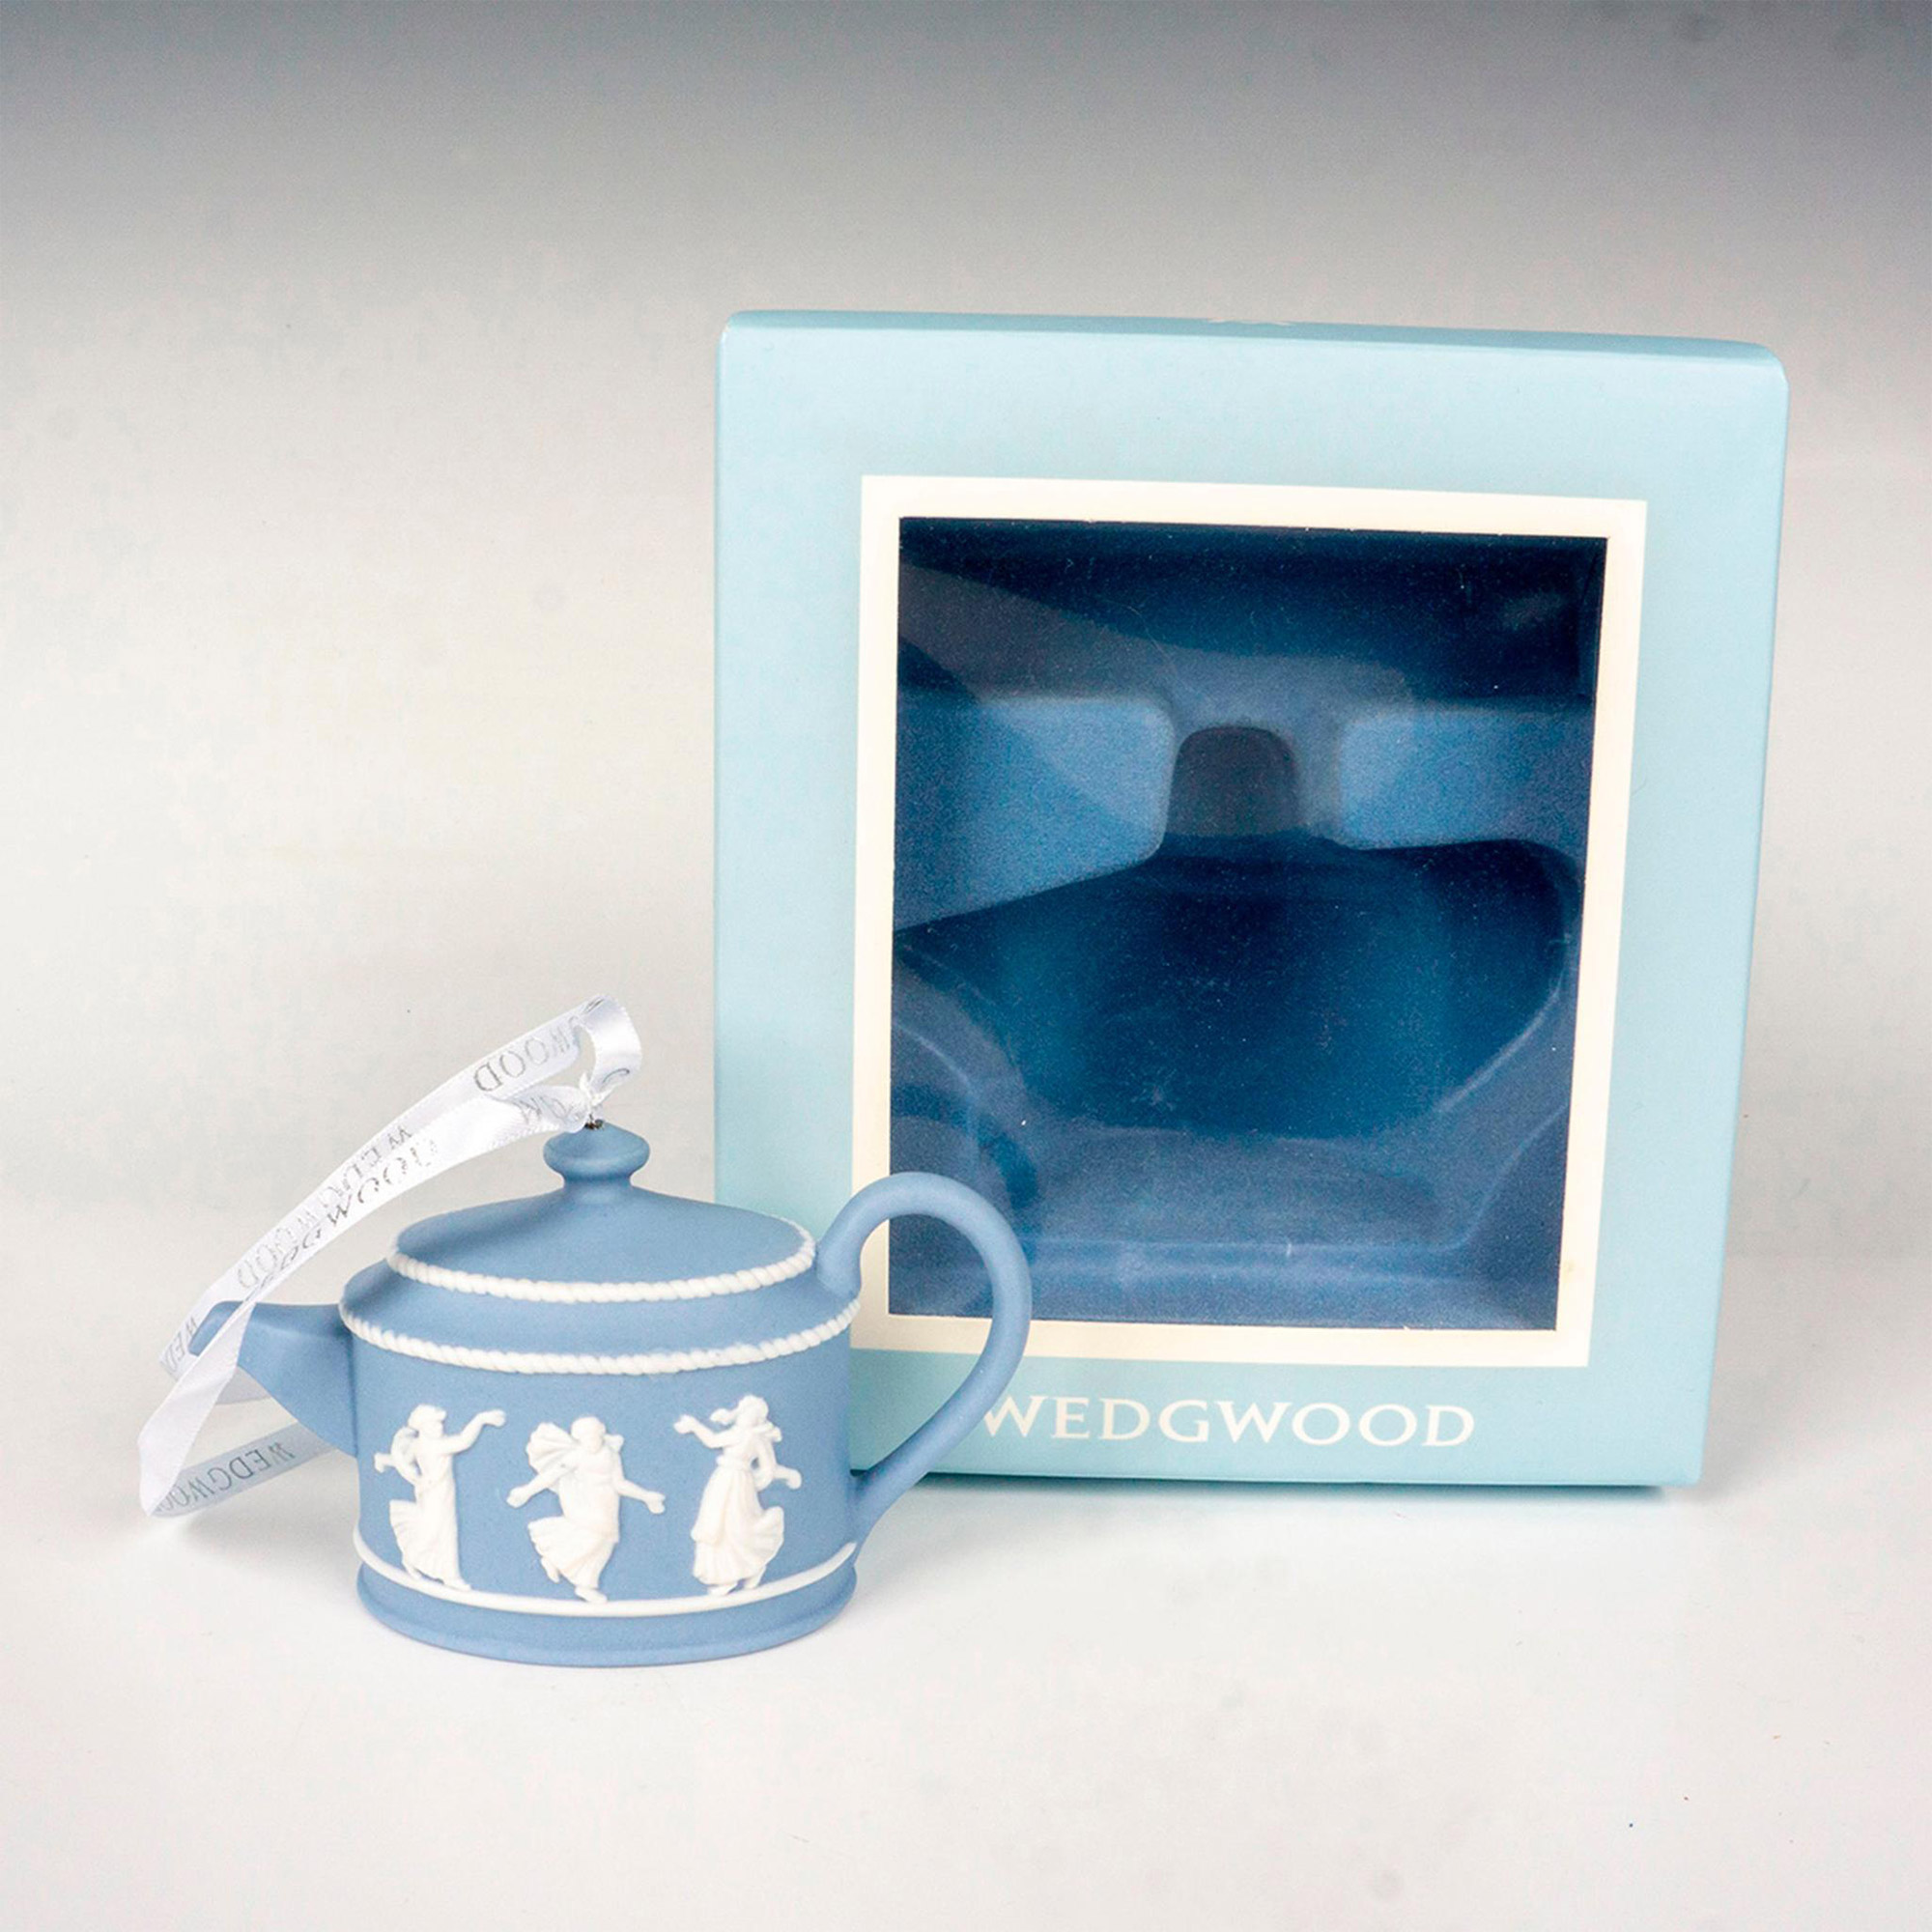 Wedgwood Jasperware Ornament, Teapot - Image 4 of 4